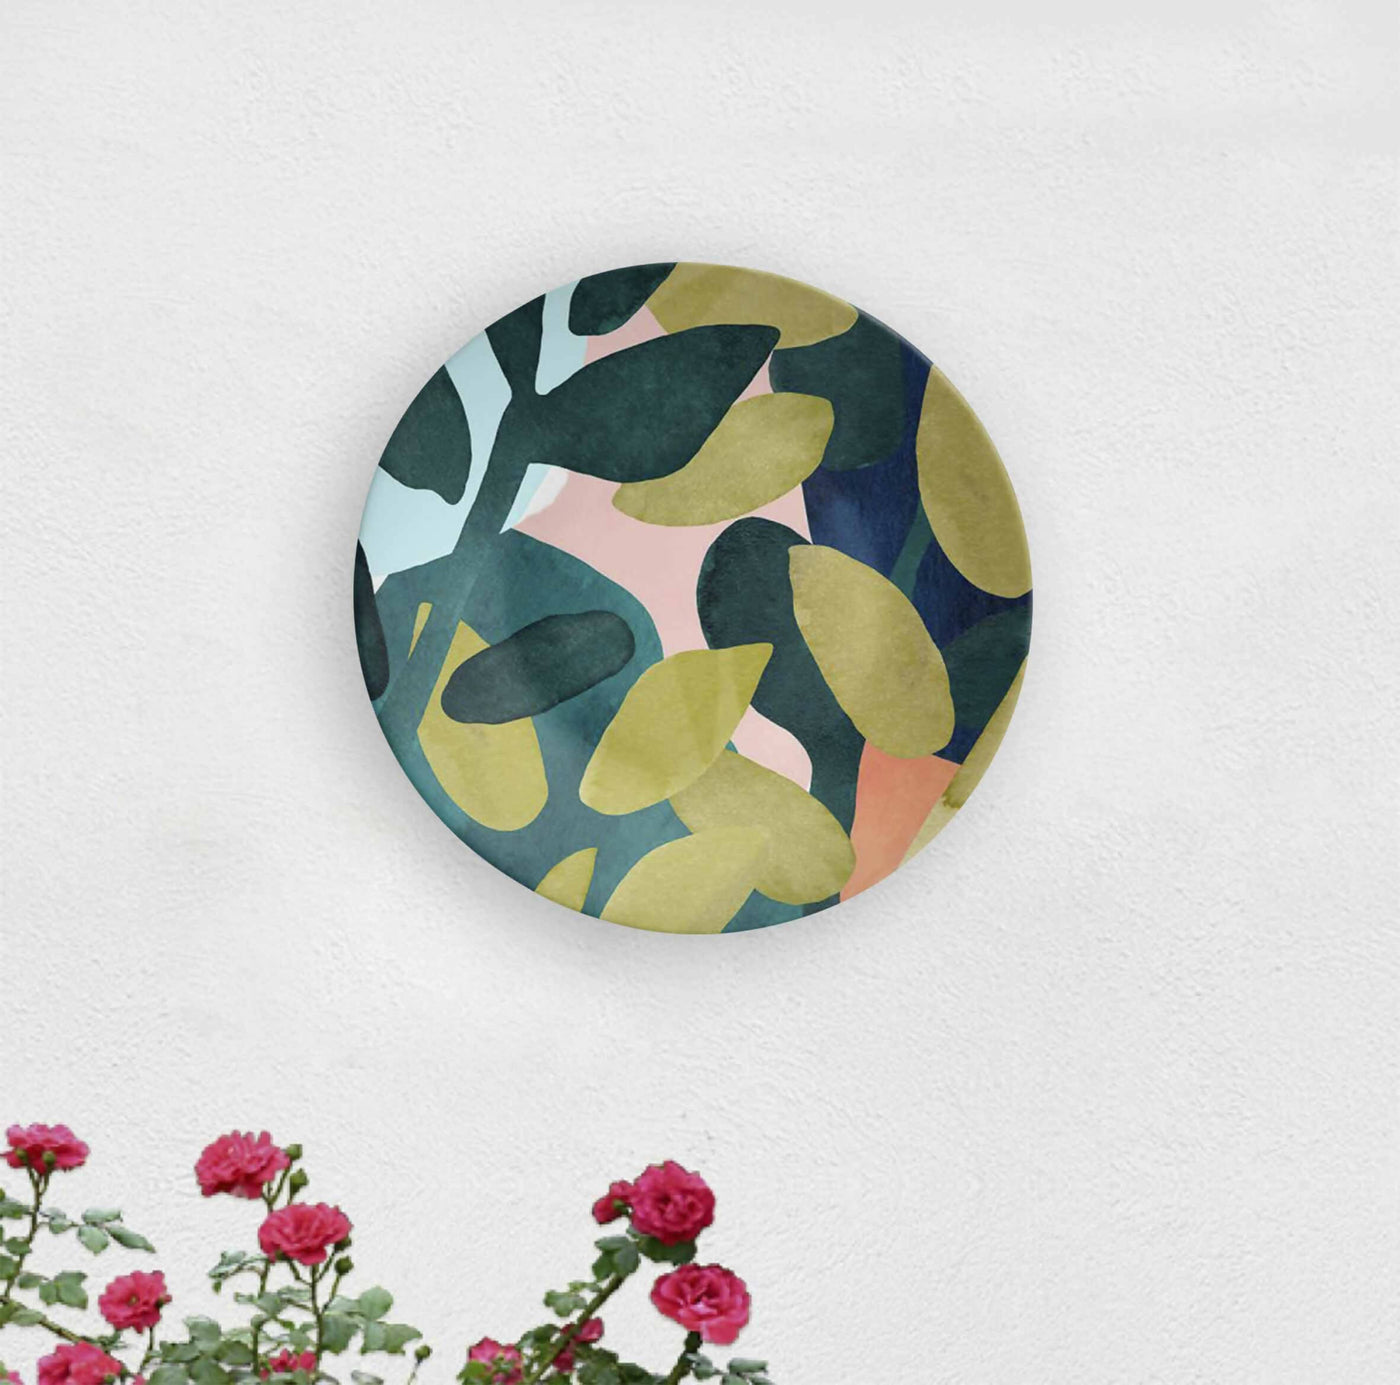 American Artistic Flower Decorative Wall Plate - Wall Decor - 1